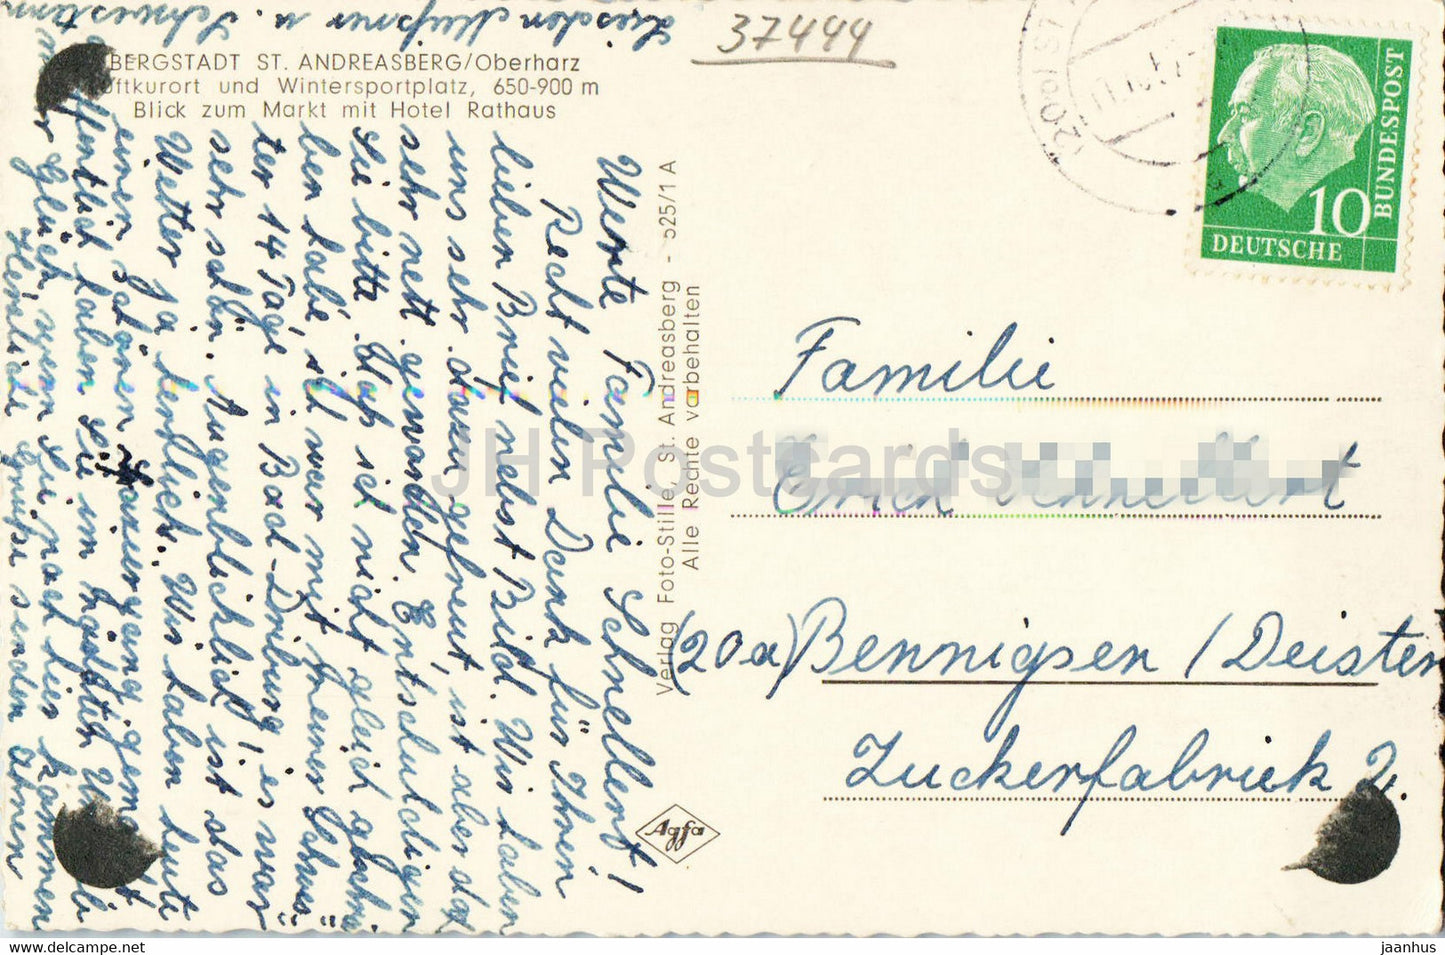 Bergstadt St Andreasberg - Blick zum Markt mit Hotel Rathaus - carte postale ancienne - Allemagne - utilisé